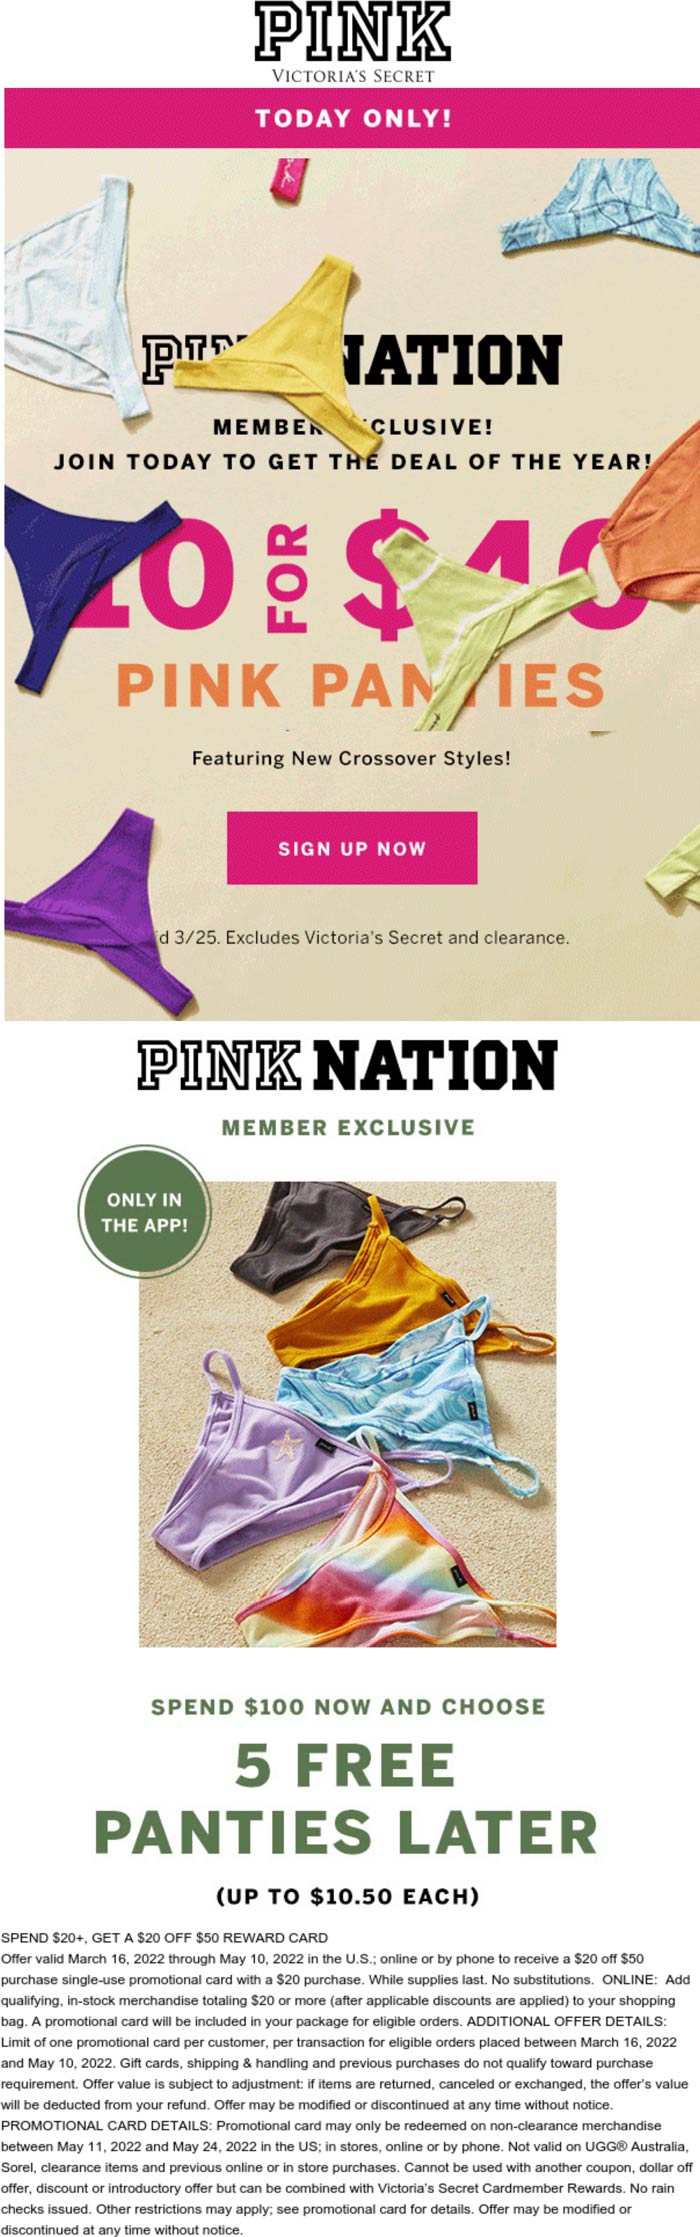 PINK stores Coupon  10 panties for $40 today after login at PINK #pink 